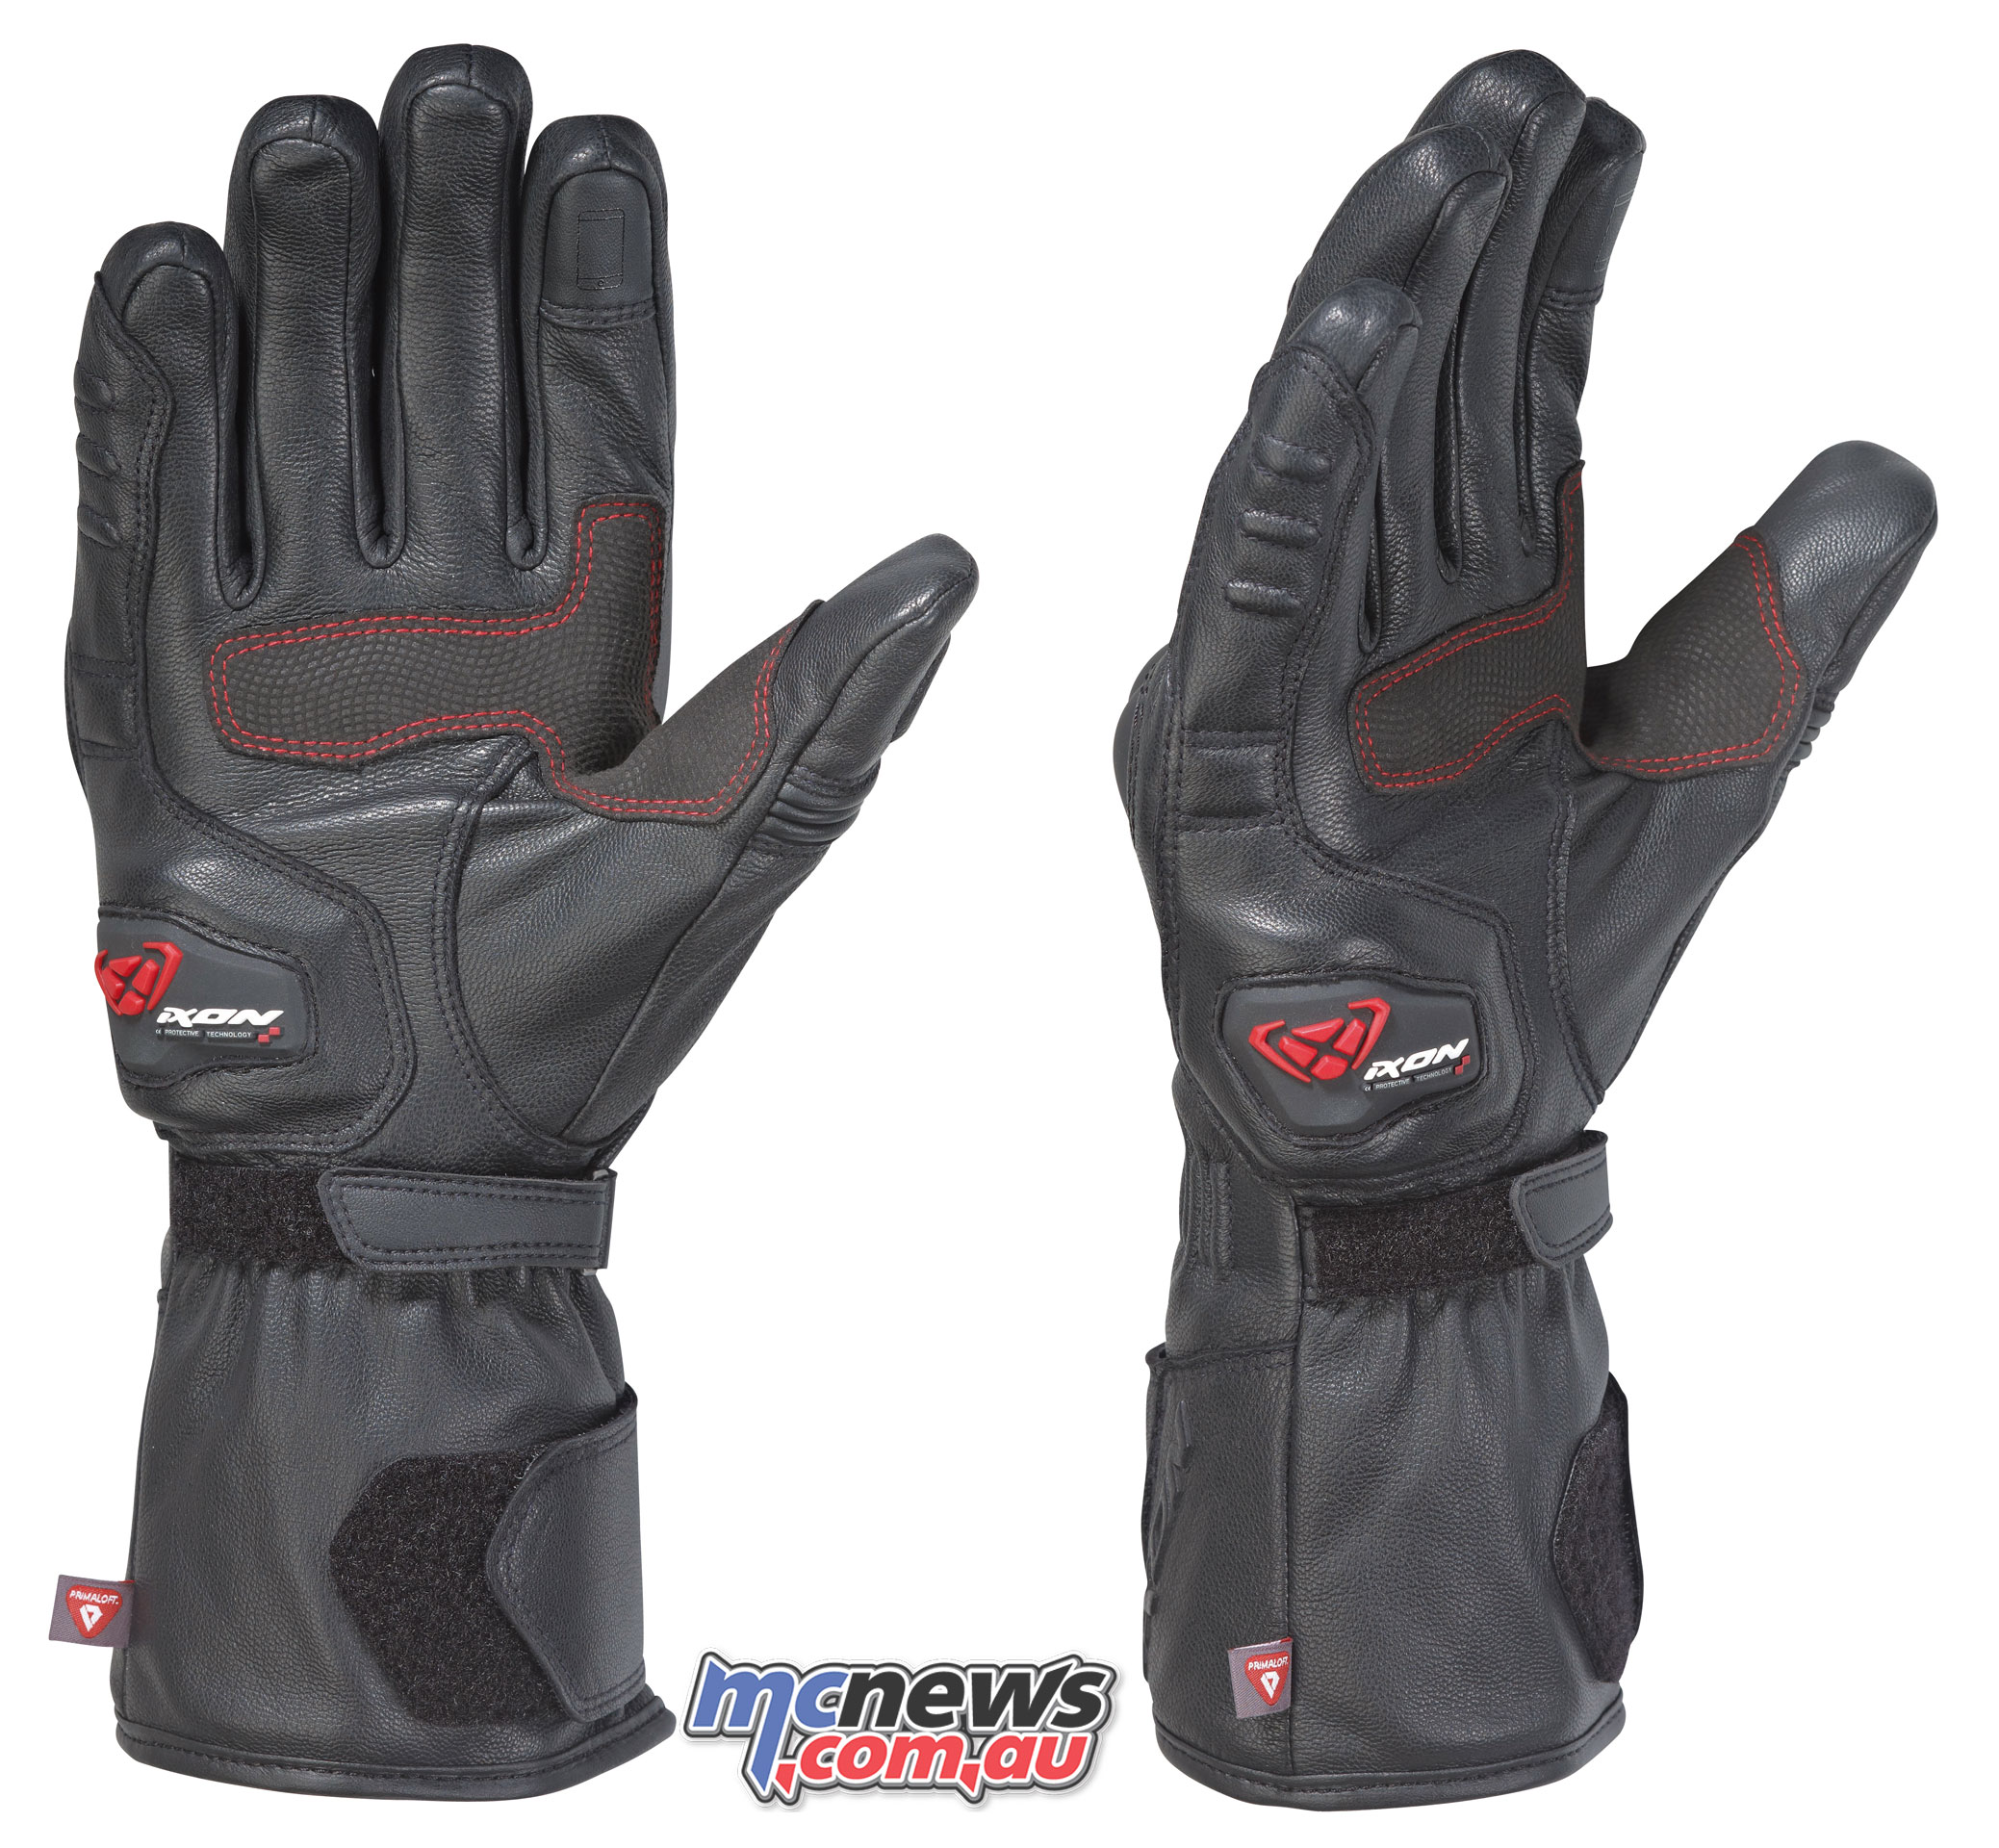 Ixon Winter Glove pro continental noir paume